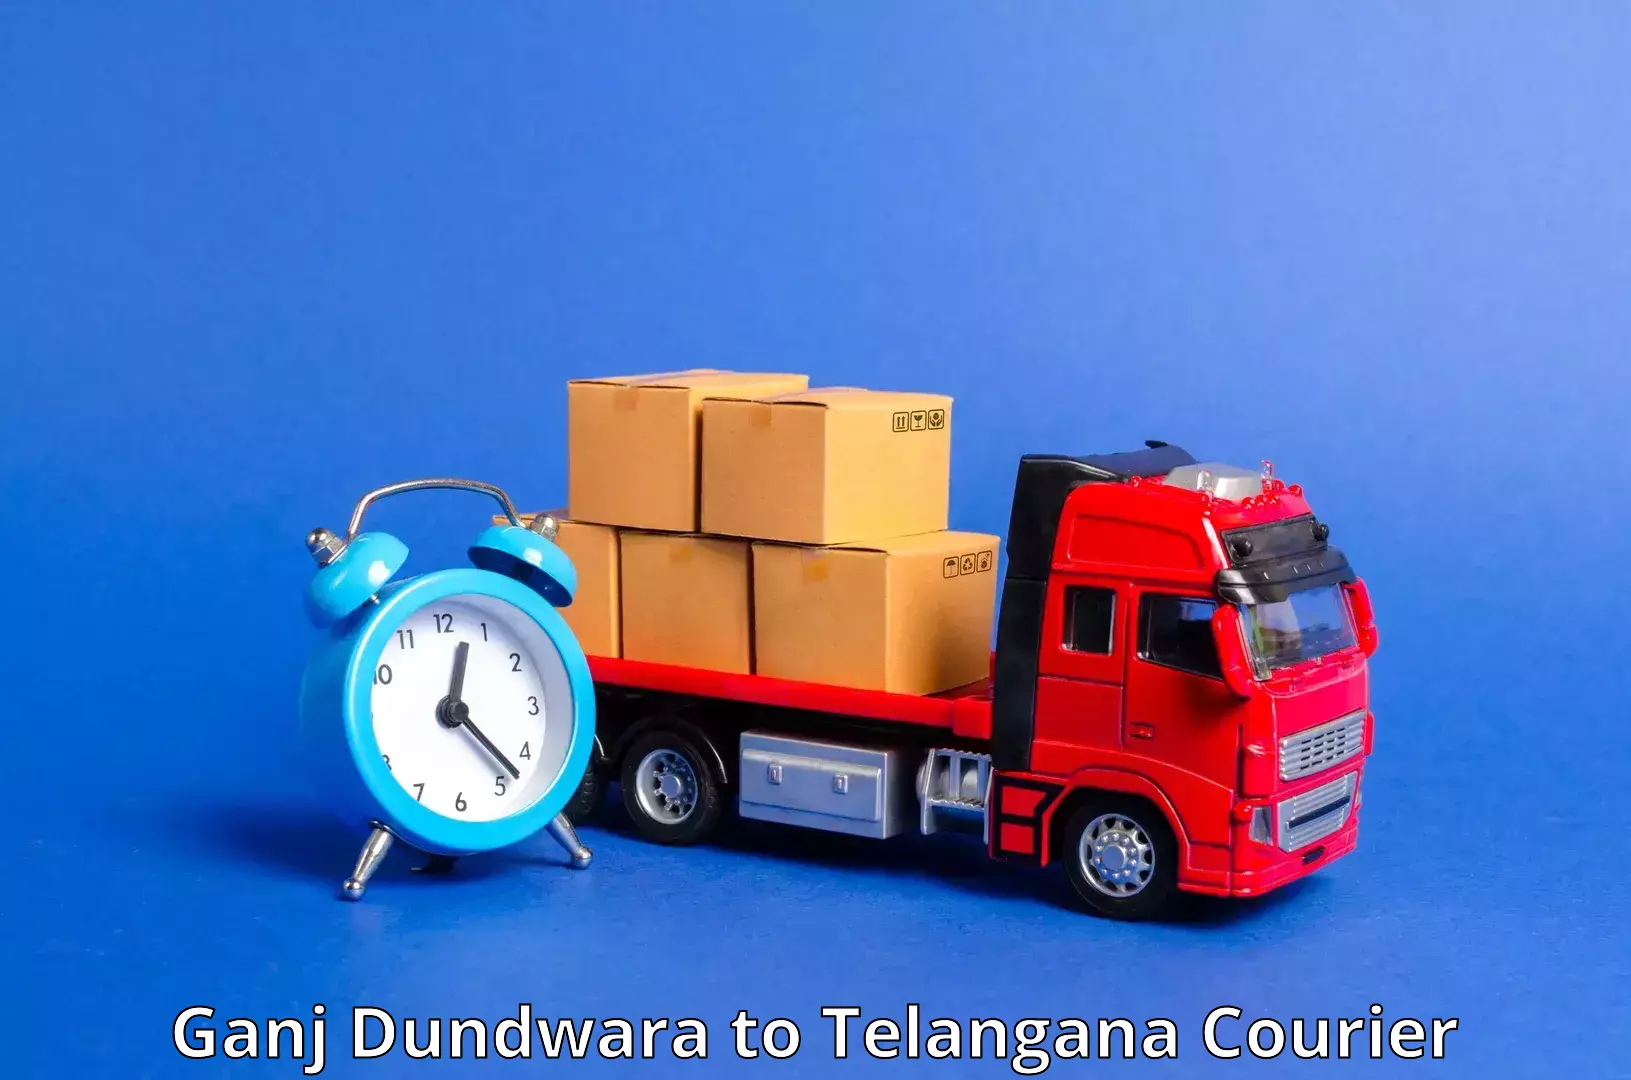 On-demand shipping options Ganj Dundwara to Marikal